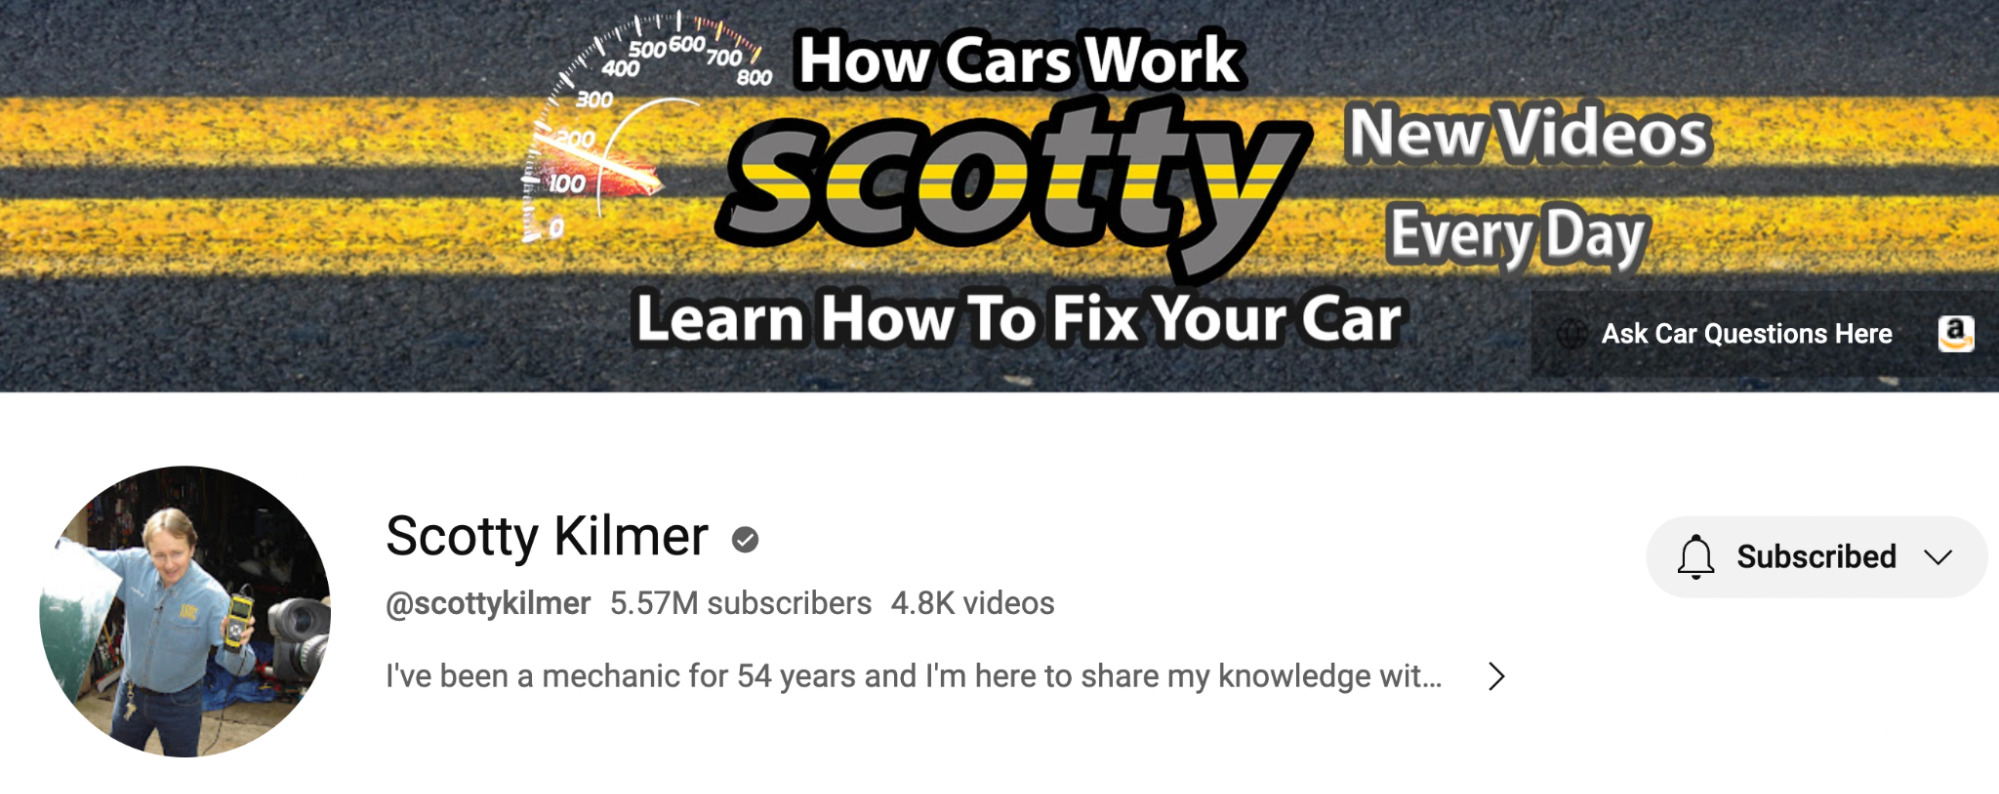 Scotty Kilmer's YouTube Channel